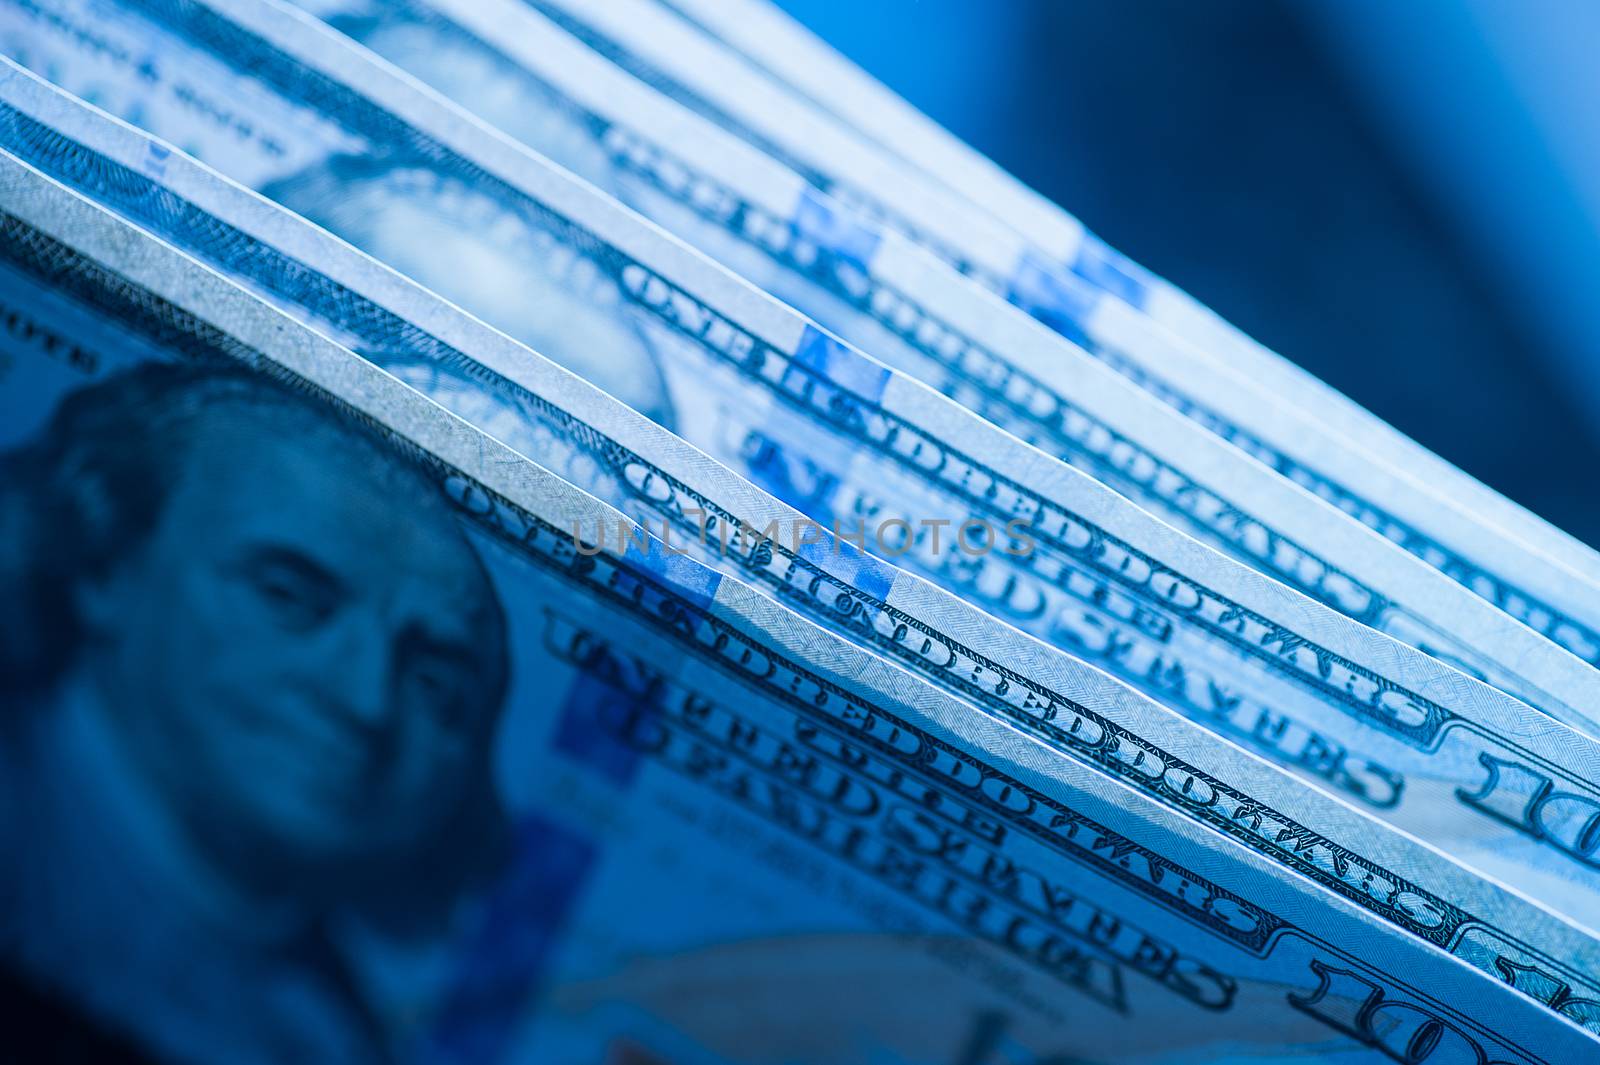 texture of dollar bills in blue tones by timonko